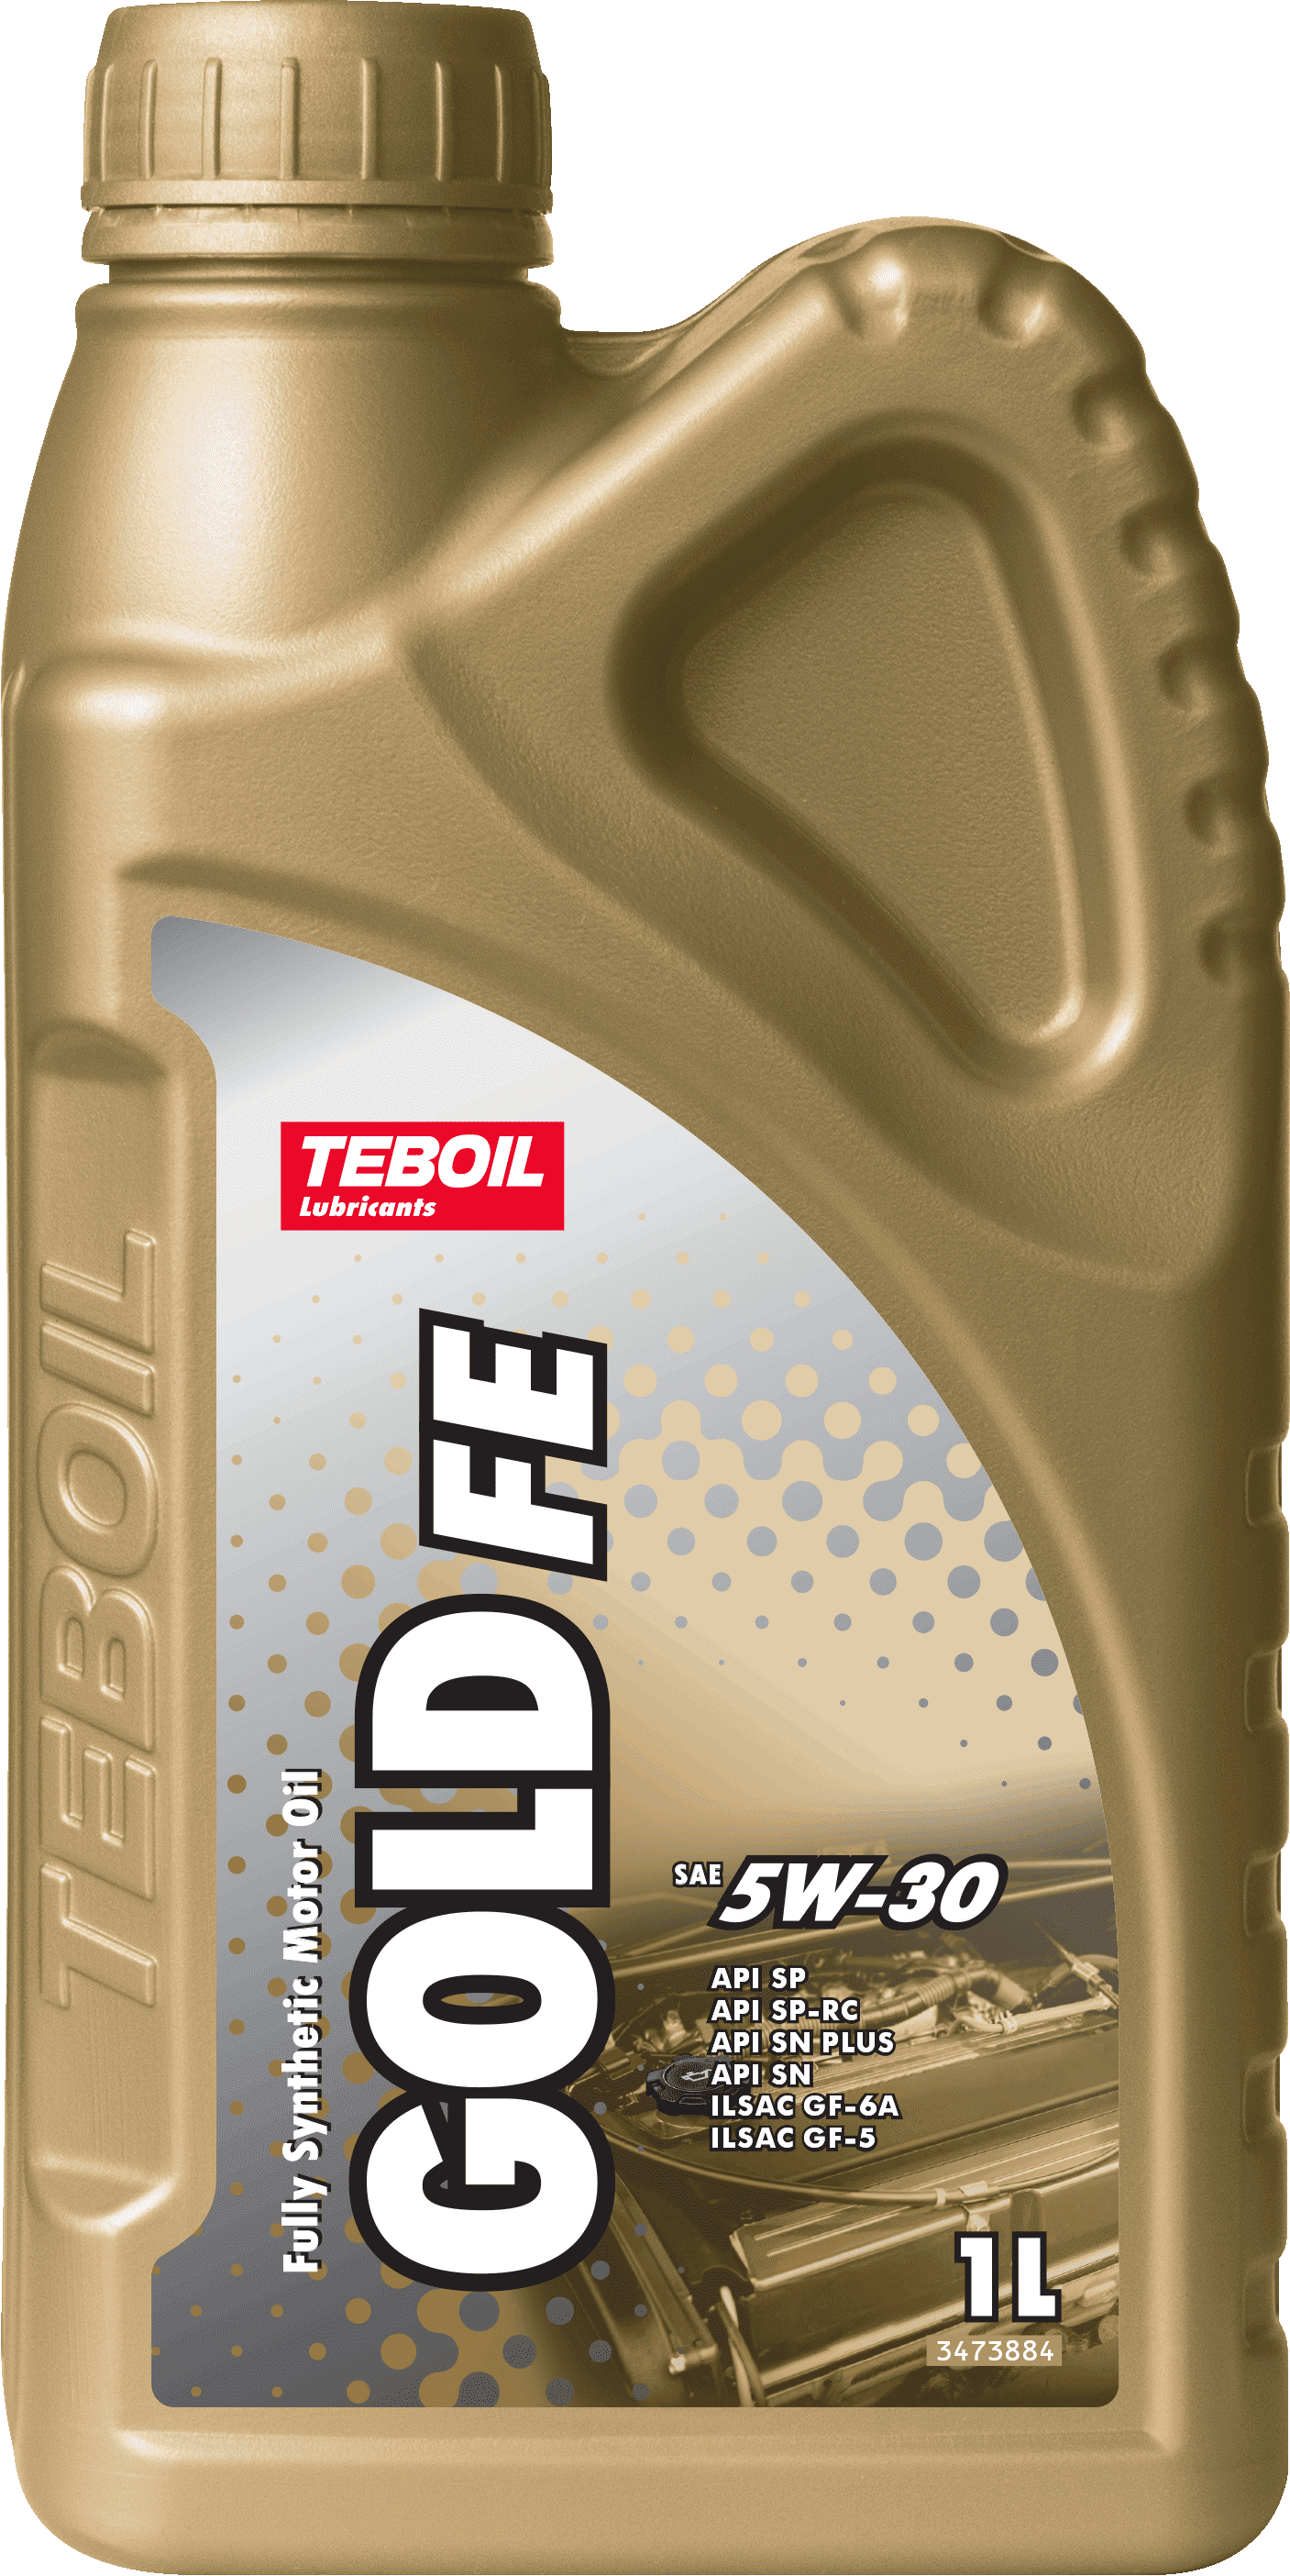 Teboil Gold FE 5W-30 - полностью синтетическое моторное масло